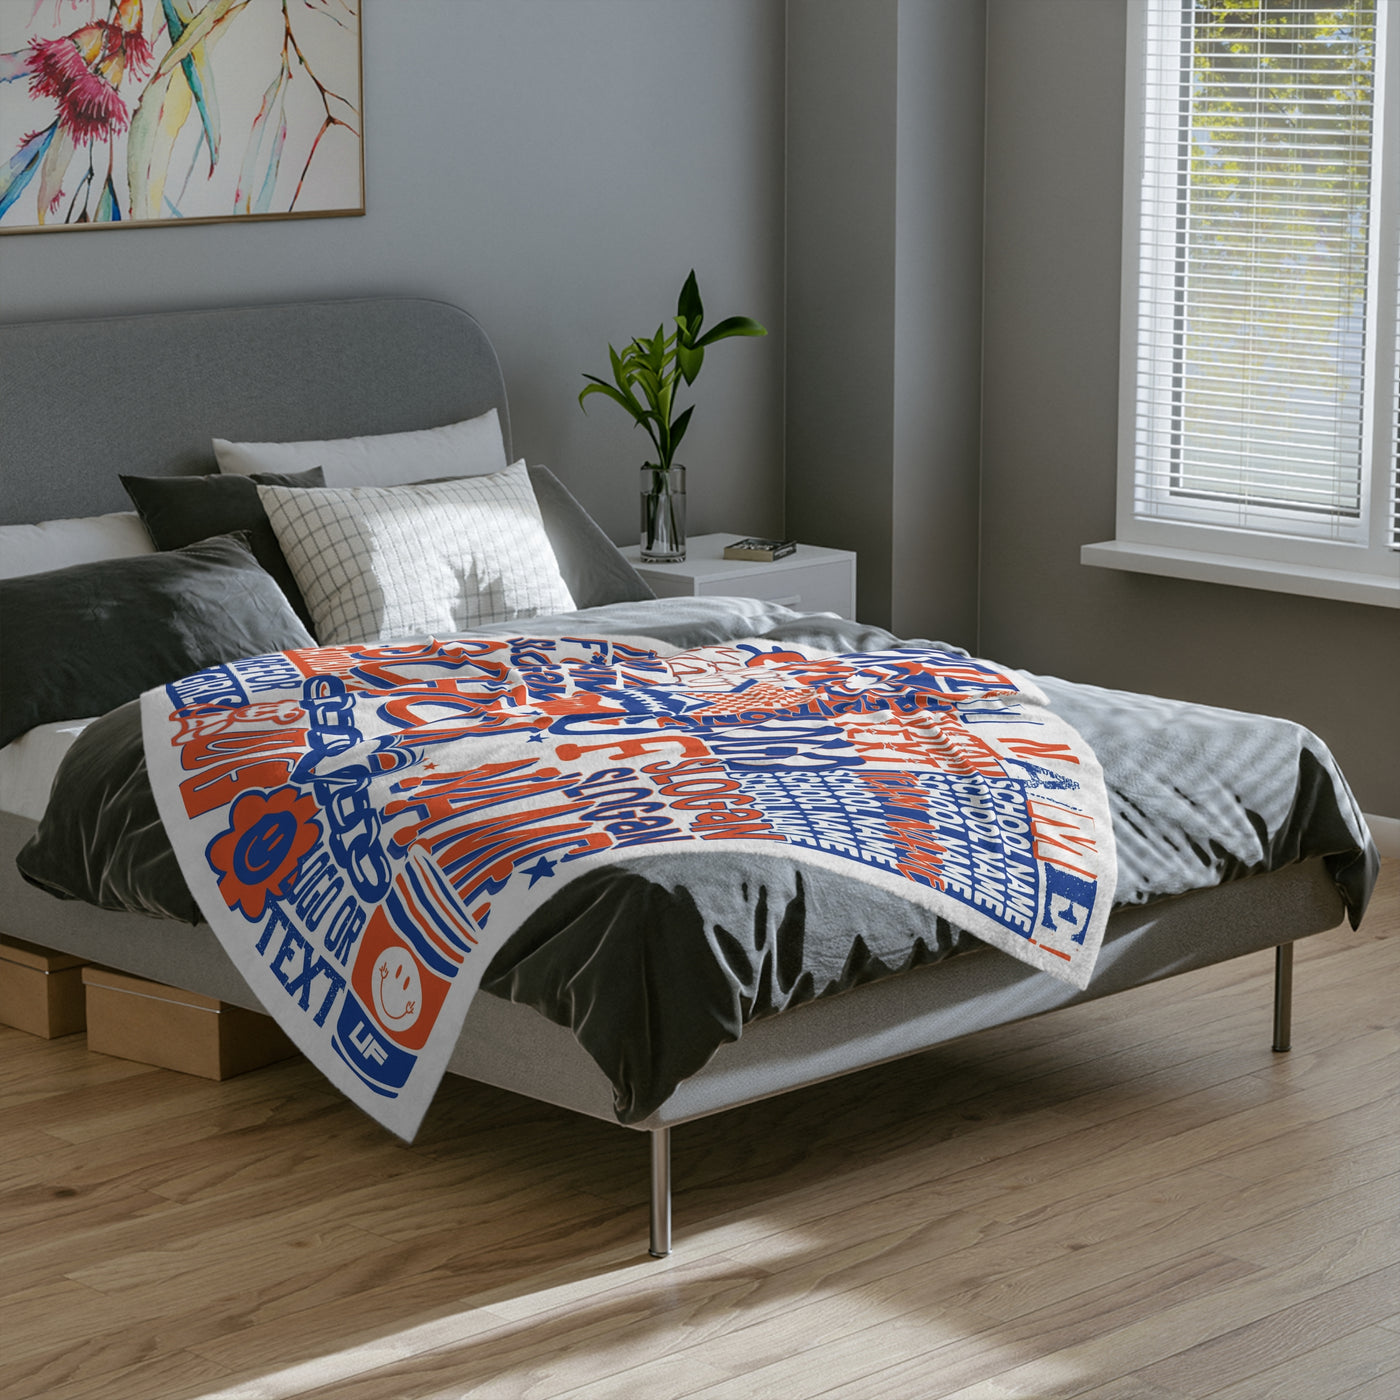 Customize Your Own 50x60 Retro Dorm Room Blanket